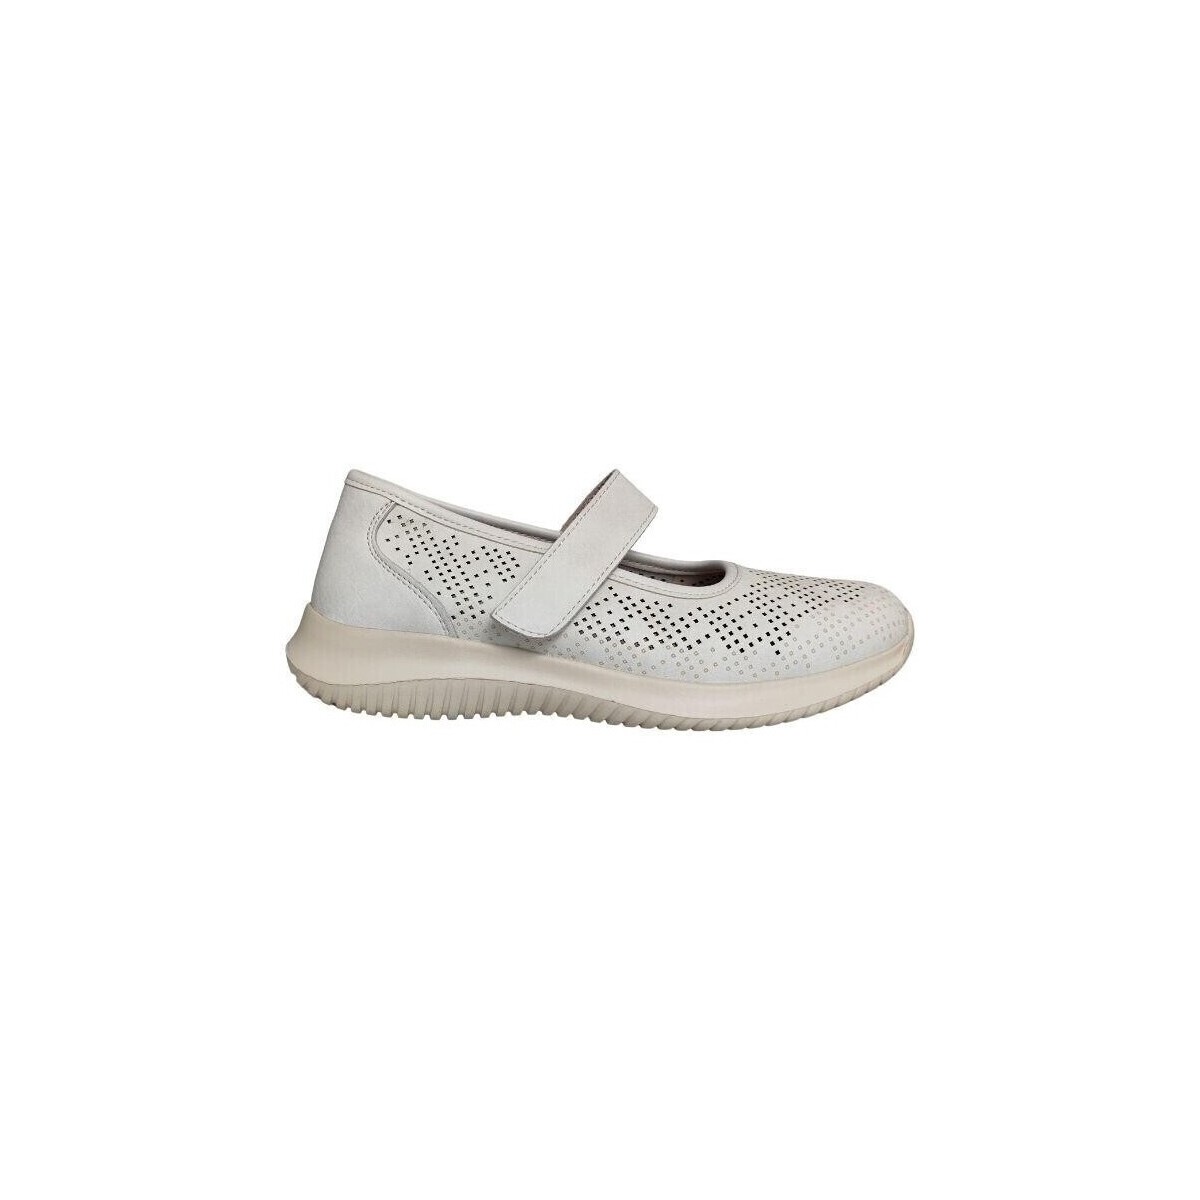 Chaussures Femme Escarpins Rks 501 Blanc